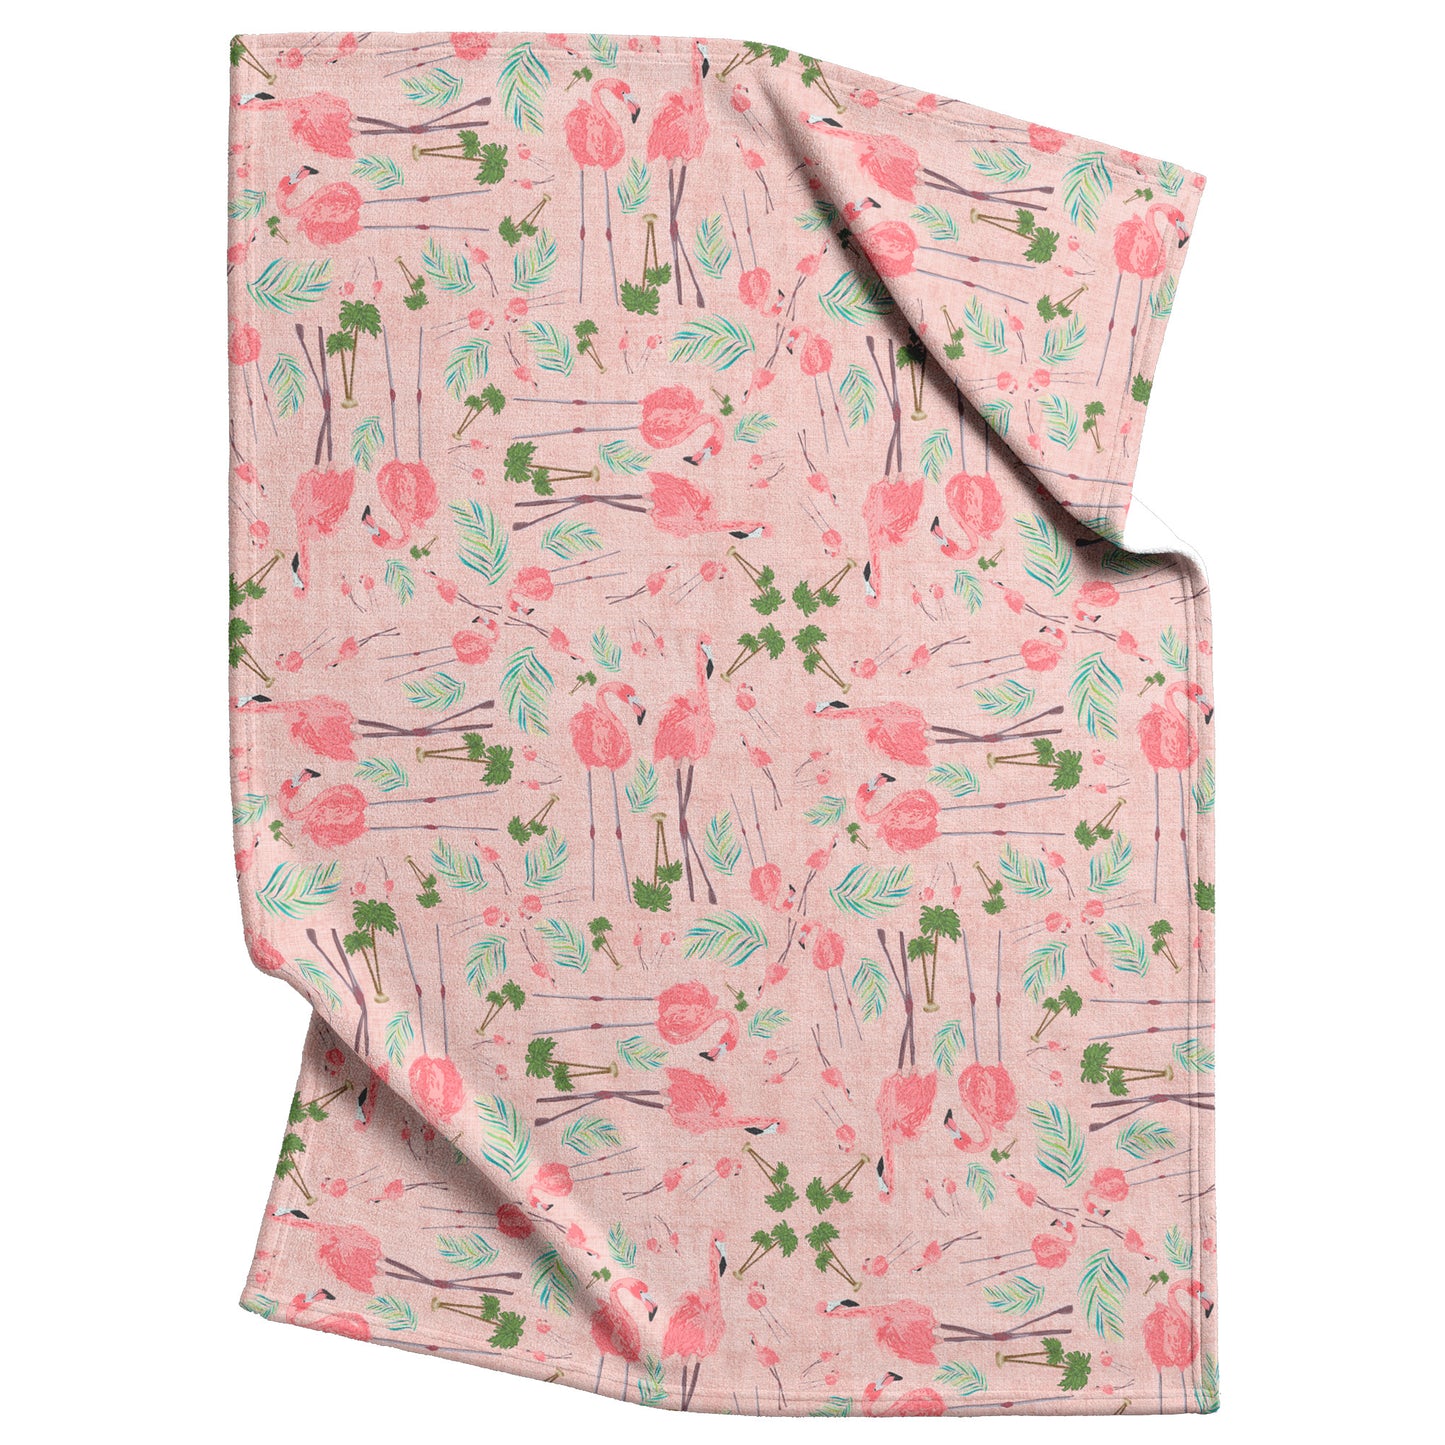 Flamingo Party on Coral Linen Textured Background, Fleece Blanket